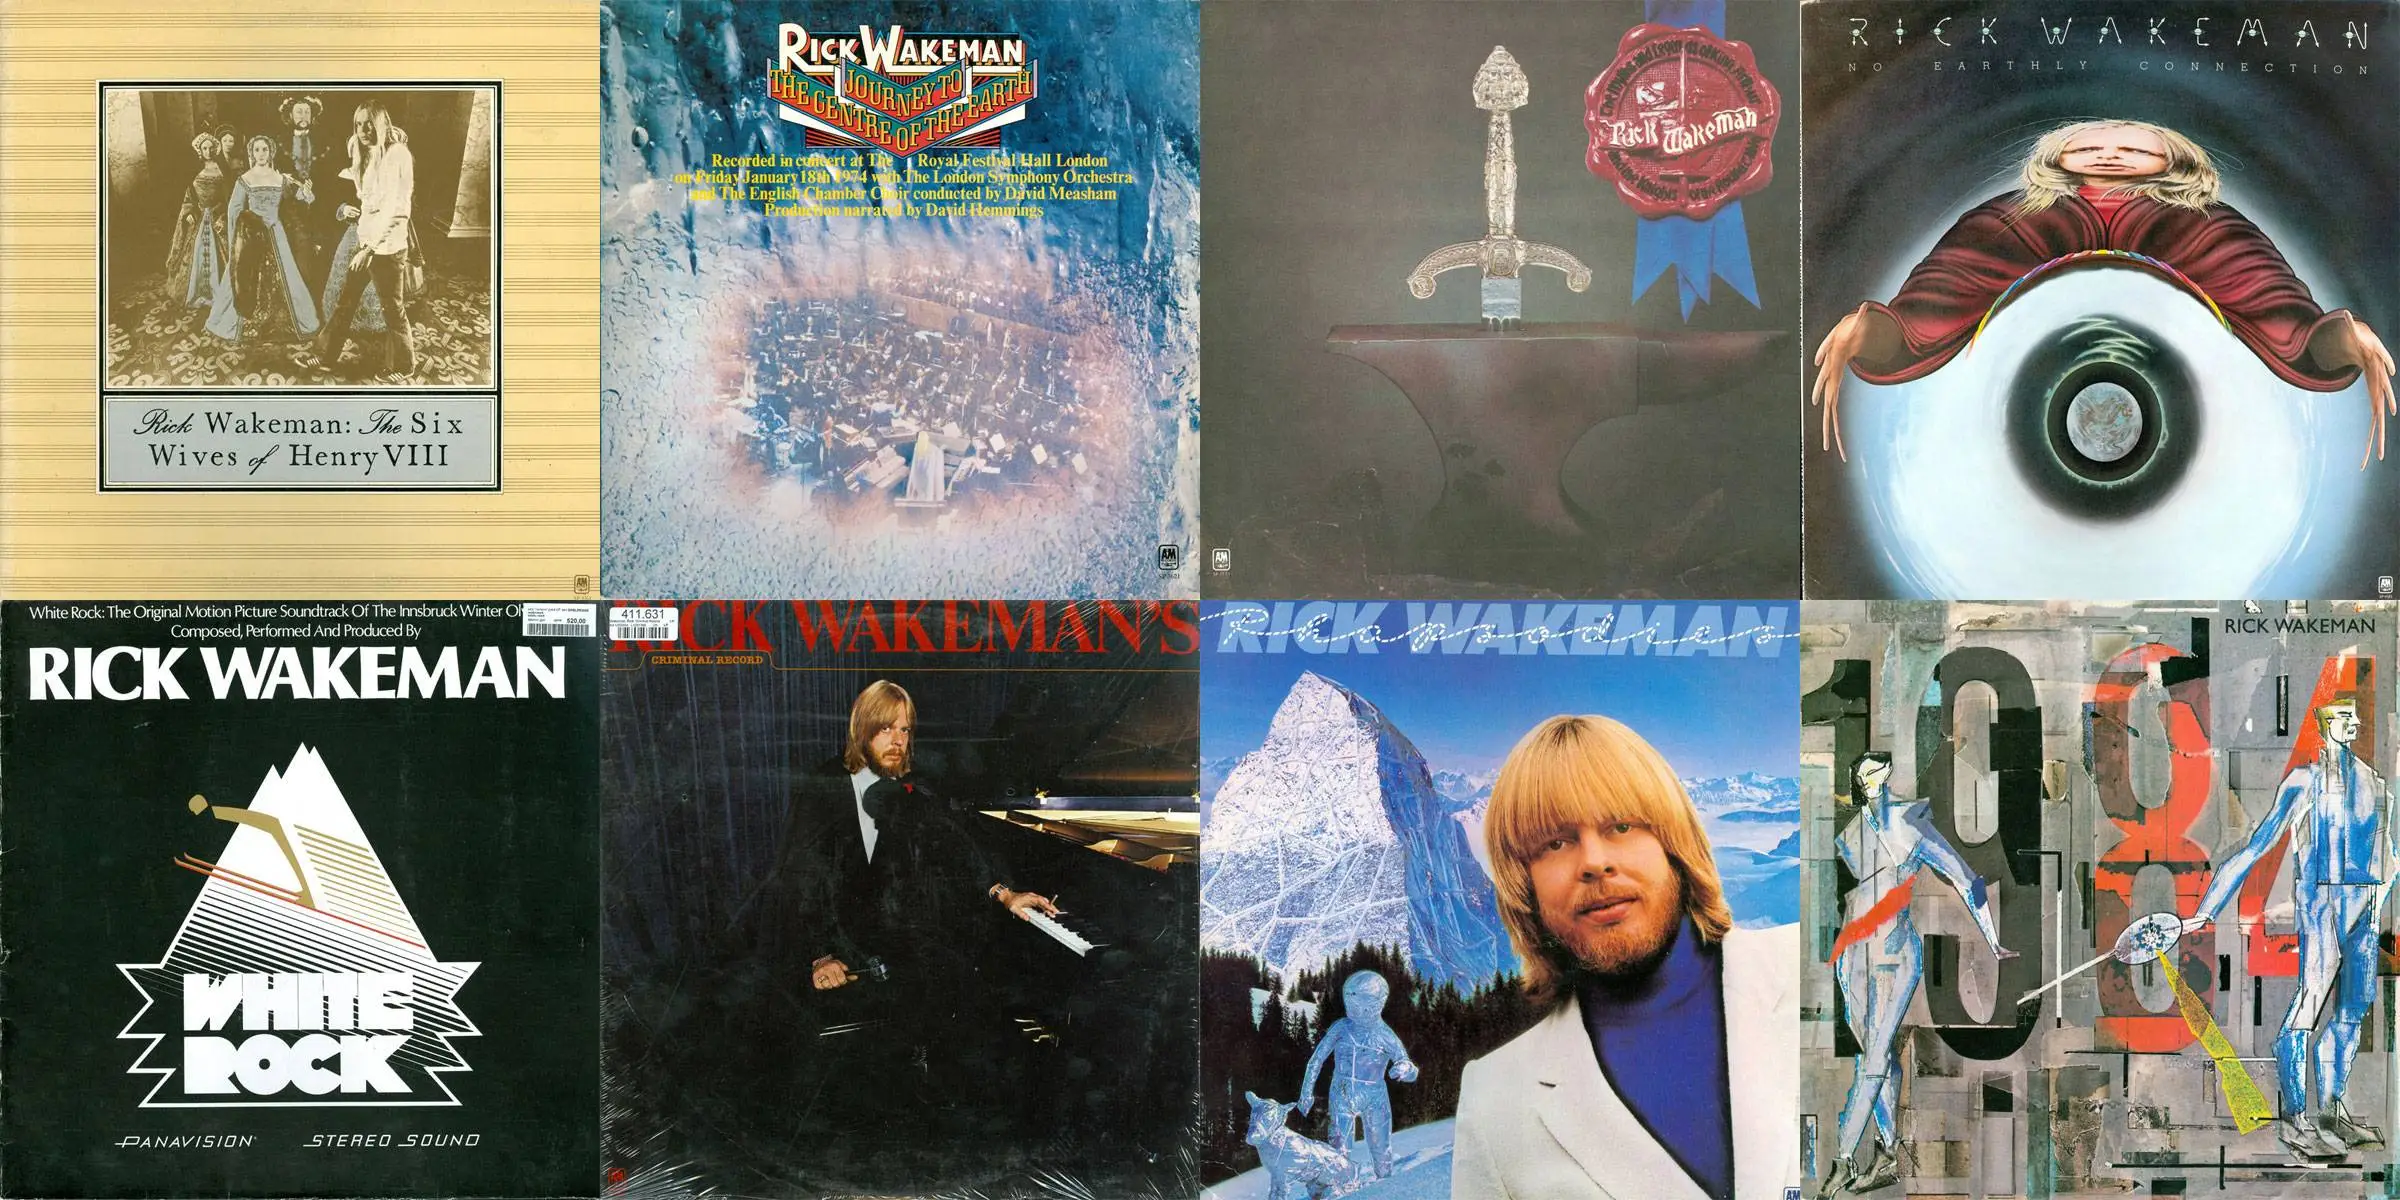 Пикник дискография mp3. Rick Wakeman 1973. Rick Wakeman - (1973) the Six wives of Henry VIII. Rick Wakeman дискография 1984. Рик Уэйкман.